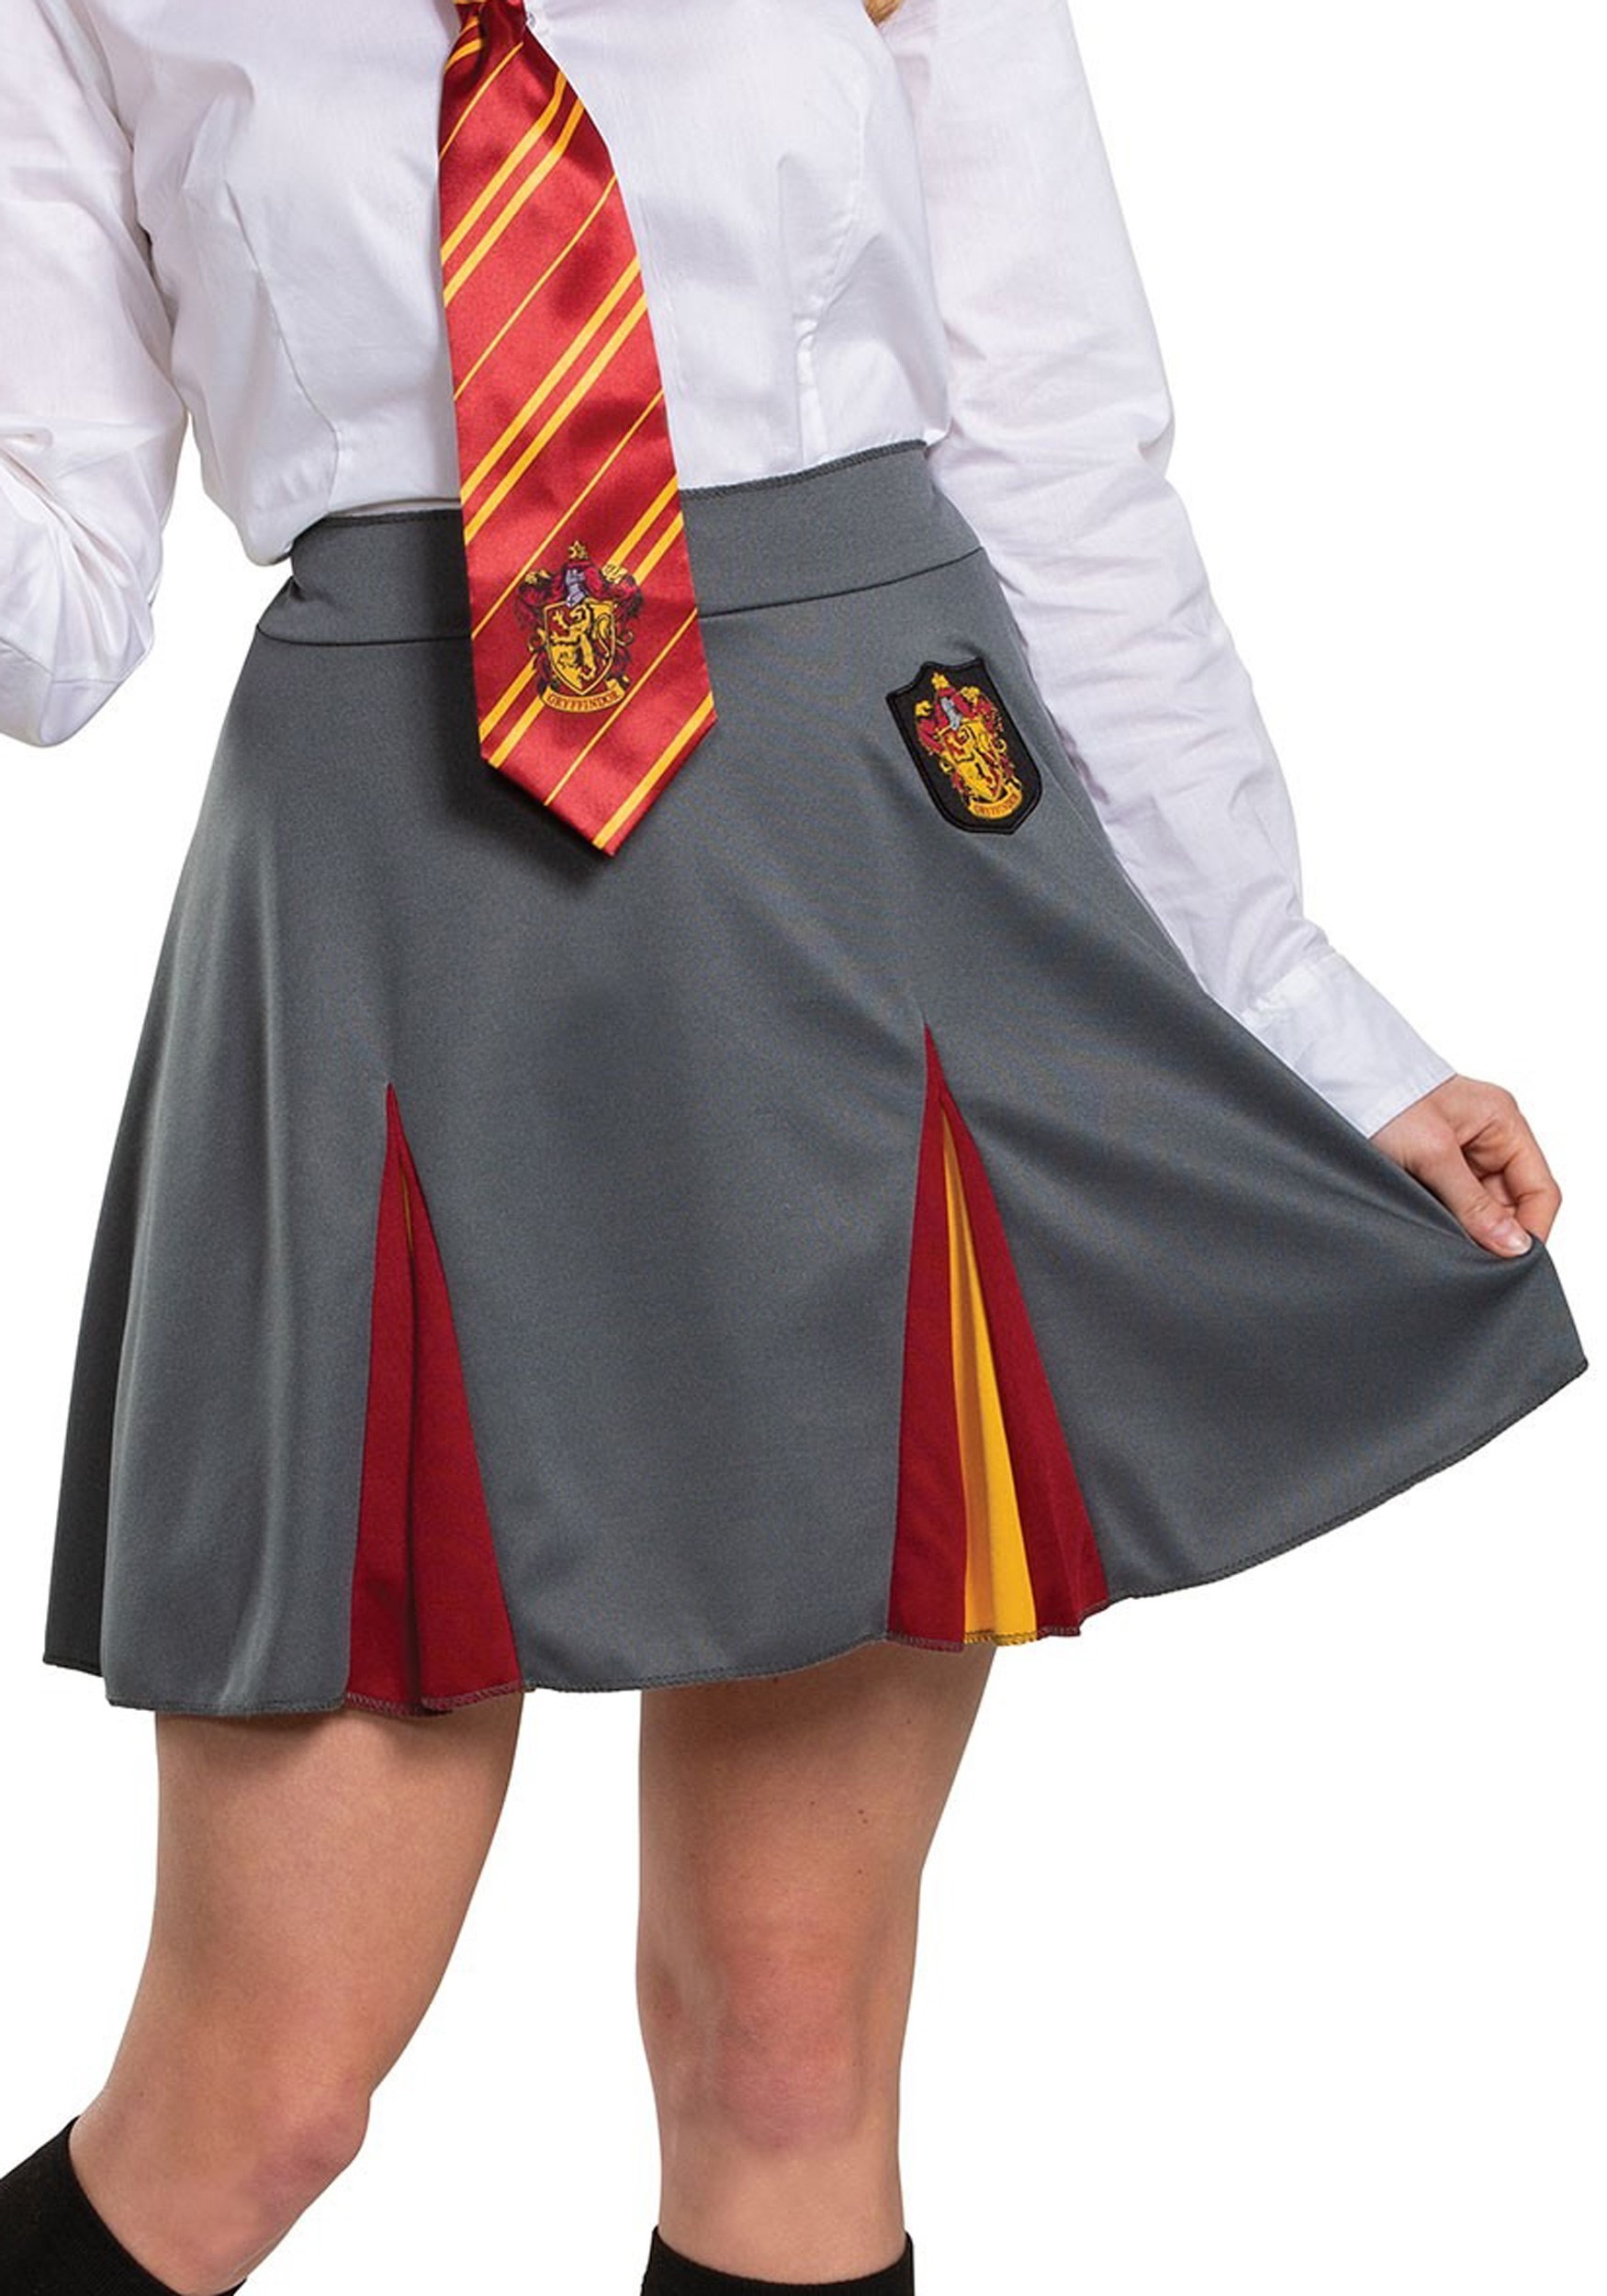 Womens Harry Potter Ravenclaw Halloween Costume Uniform Dress Large 12/14